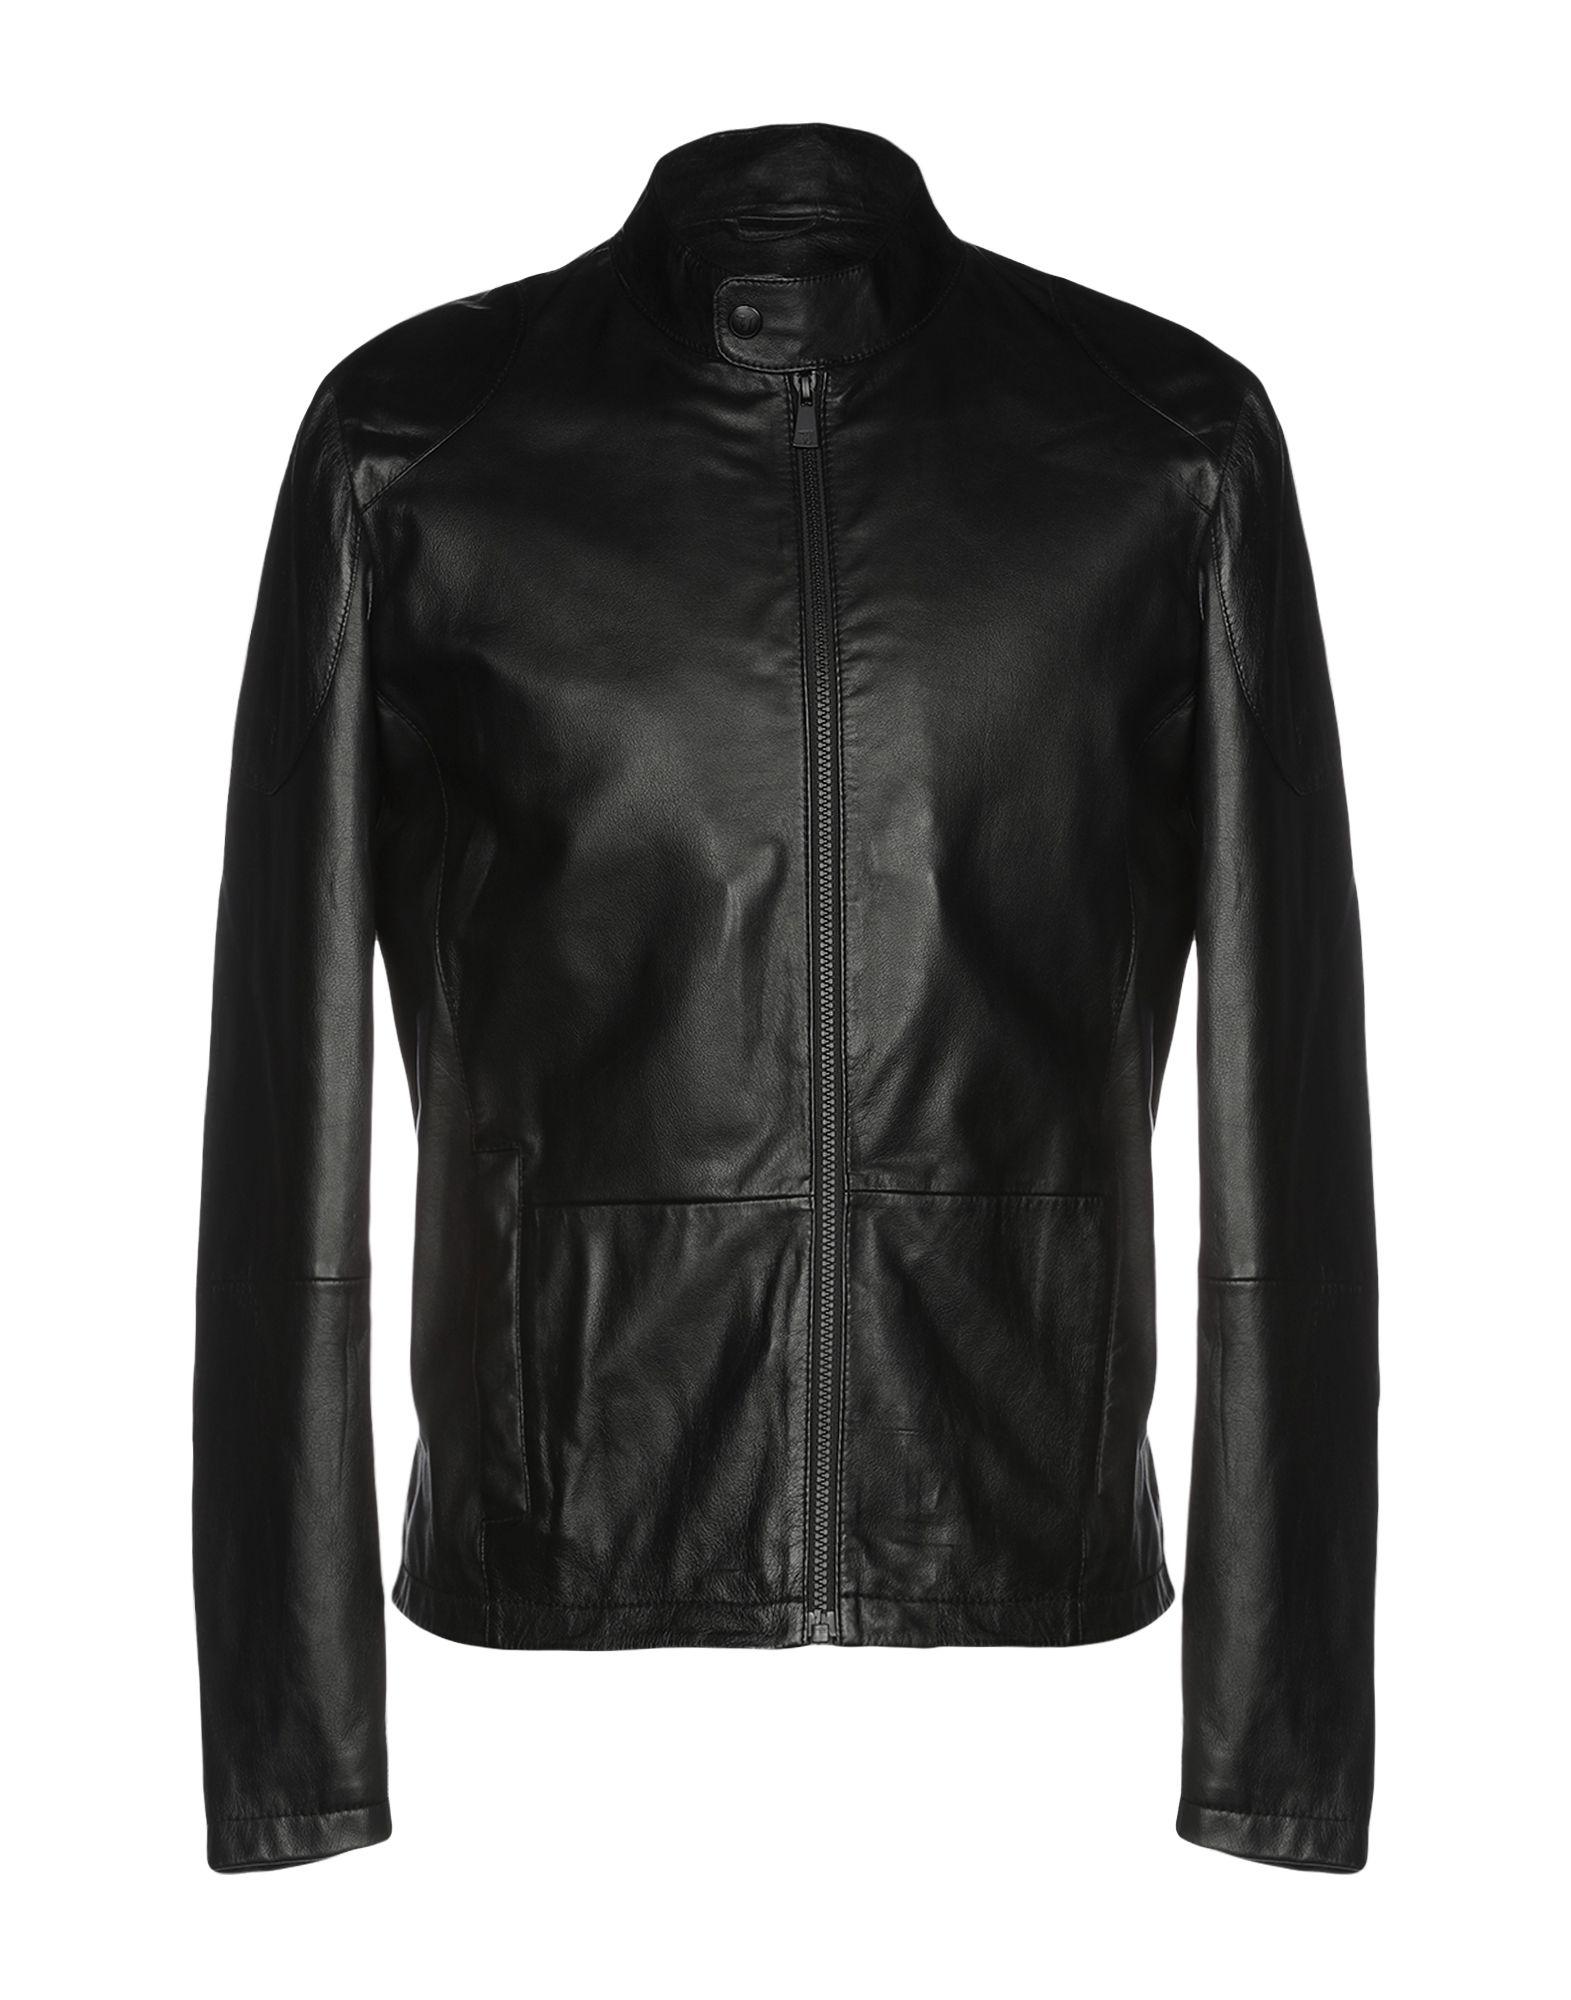 Trussardi Leather Jacket in Black for Men - Lyst